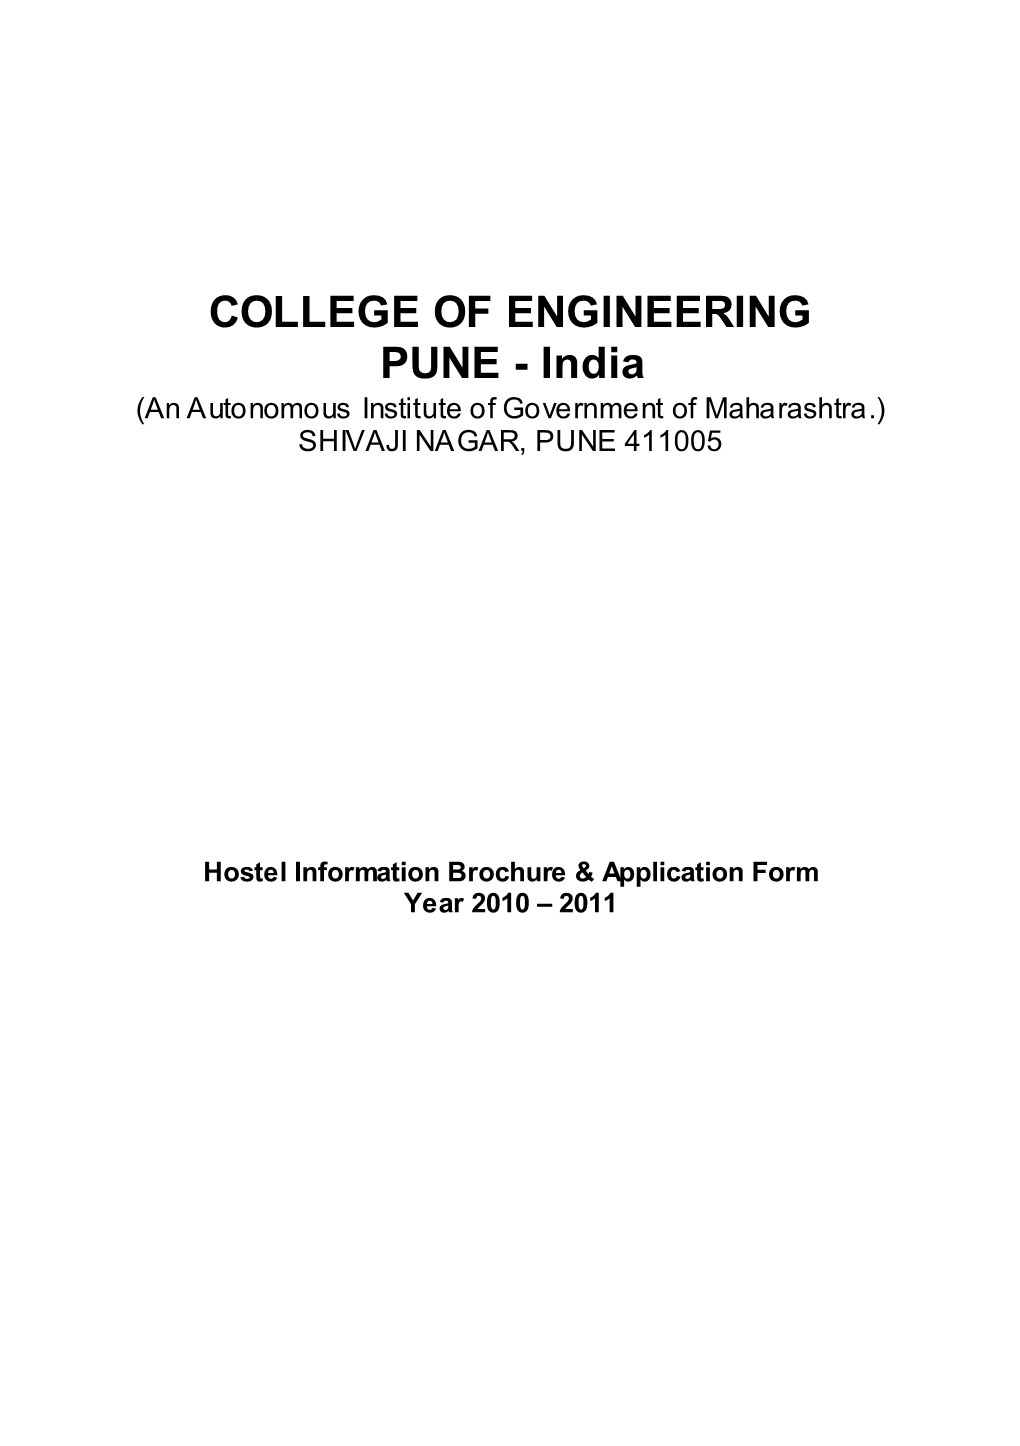 COLLEGE of ENGINEERING PUNE - India (An Autonomous Institute of Government of Maharashtra.) SHIVAJI NAGAR, PUNE 411005